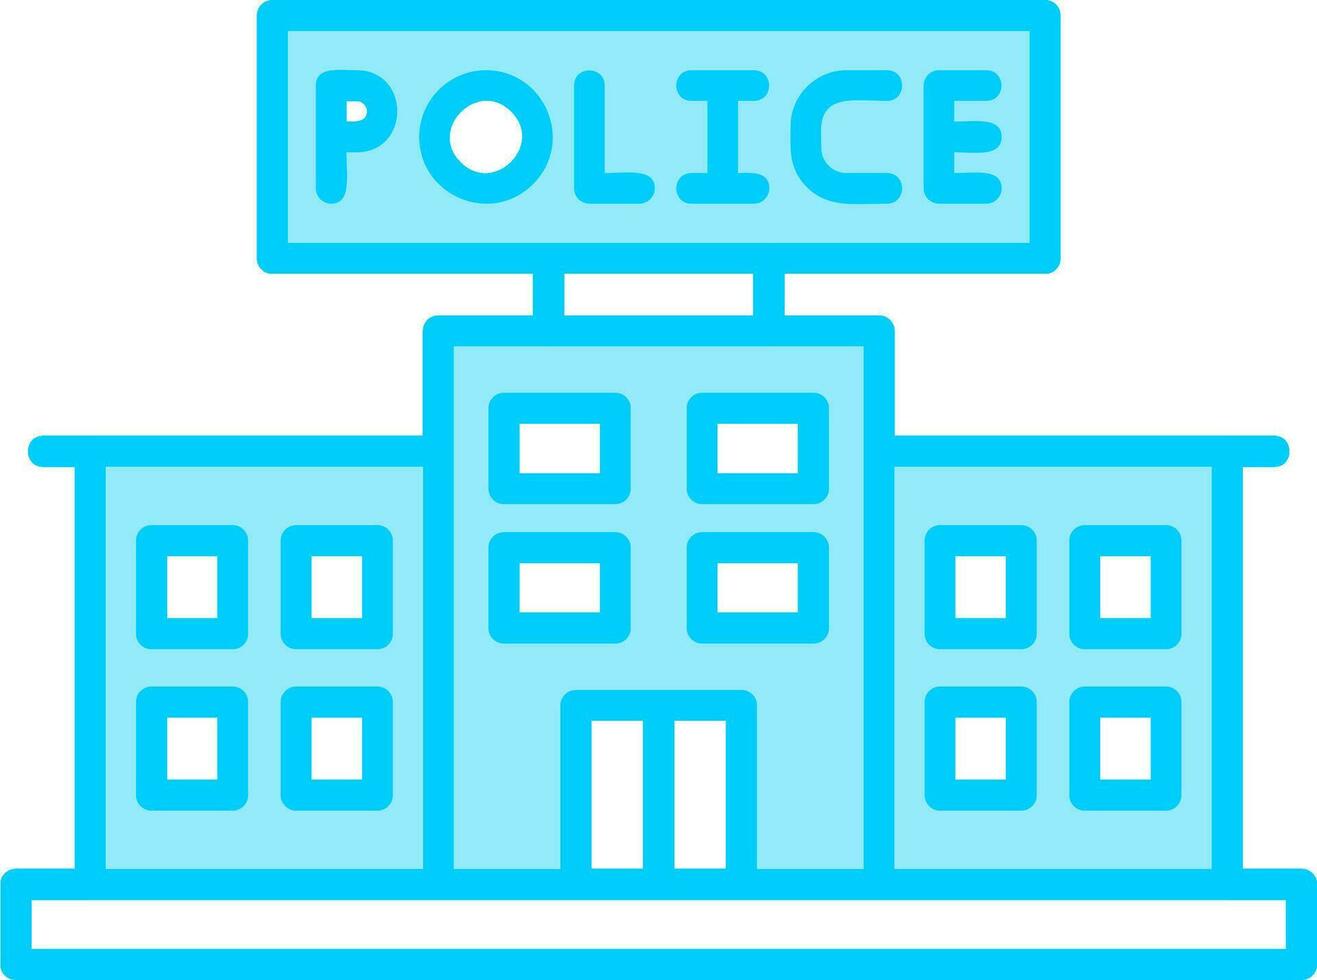 icône de vecteur de poste de police